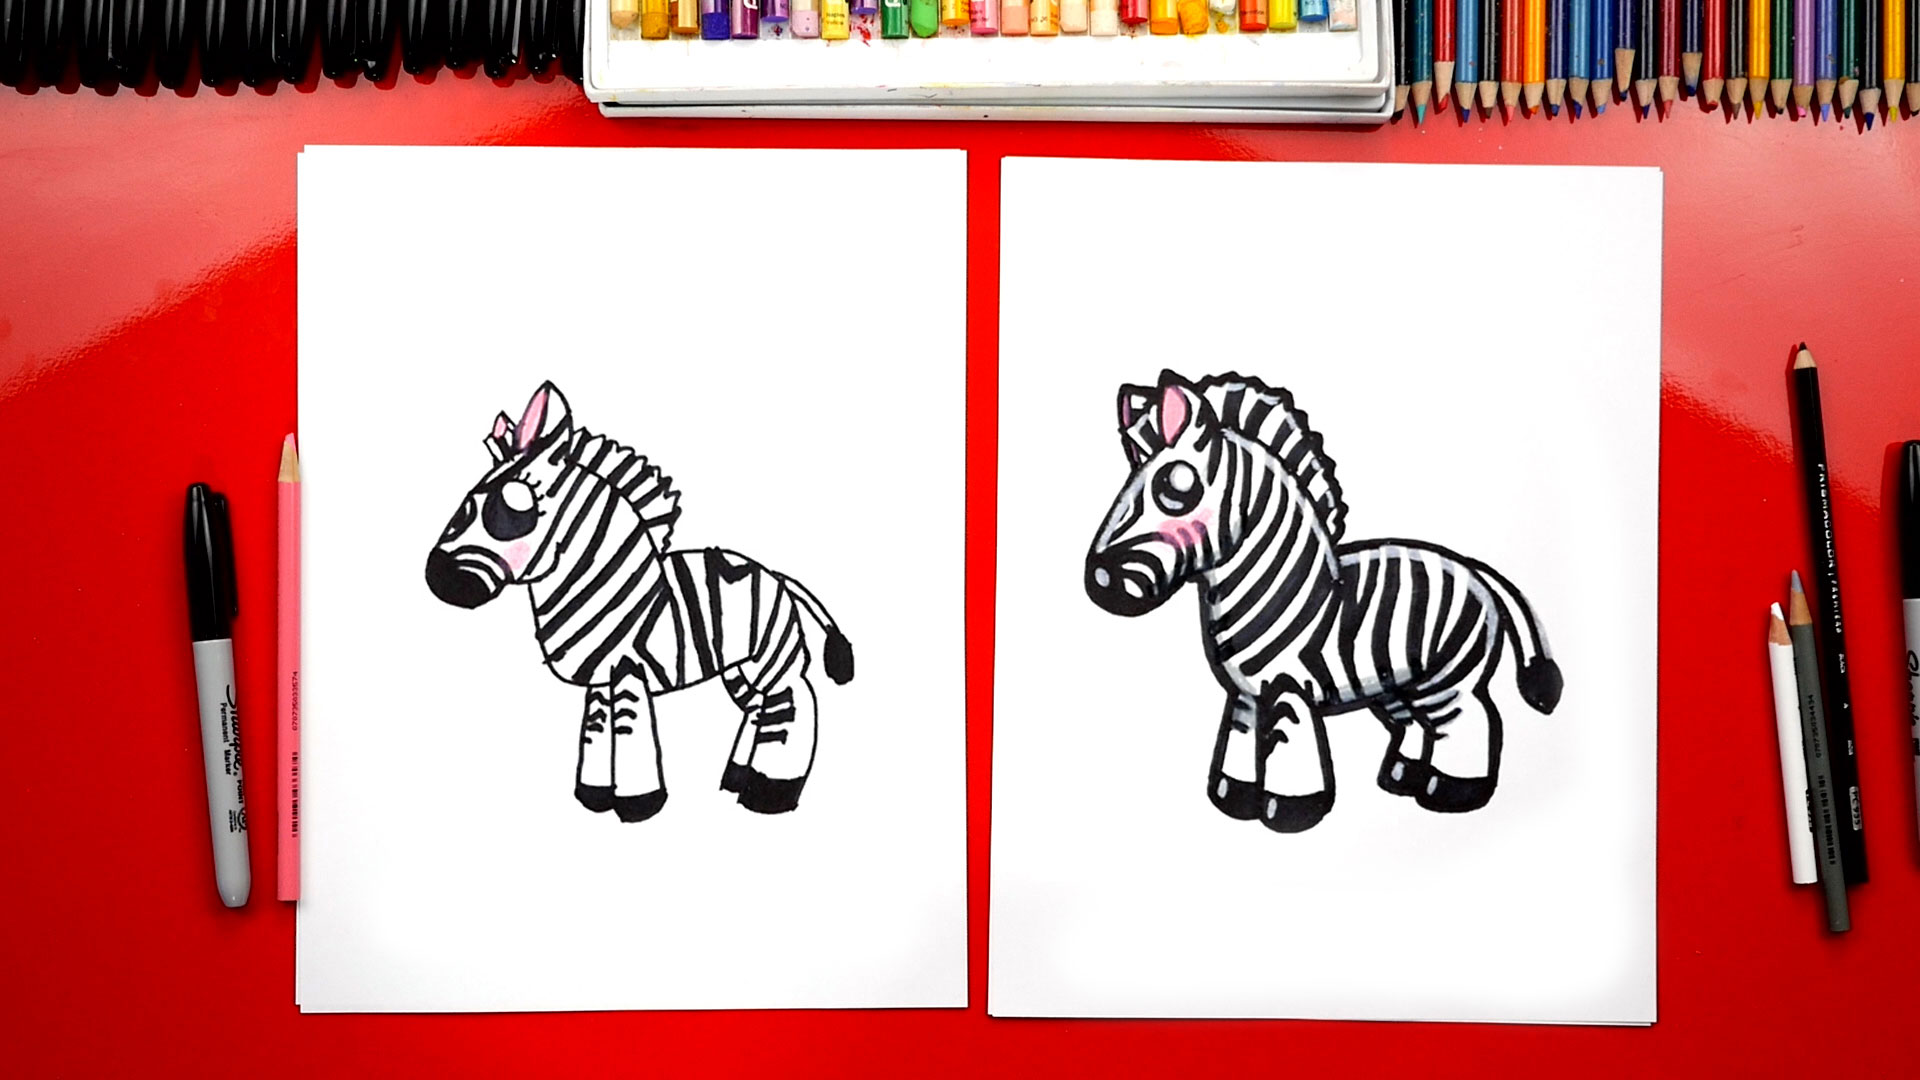 Zebra Drawings For Kids